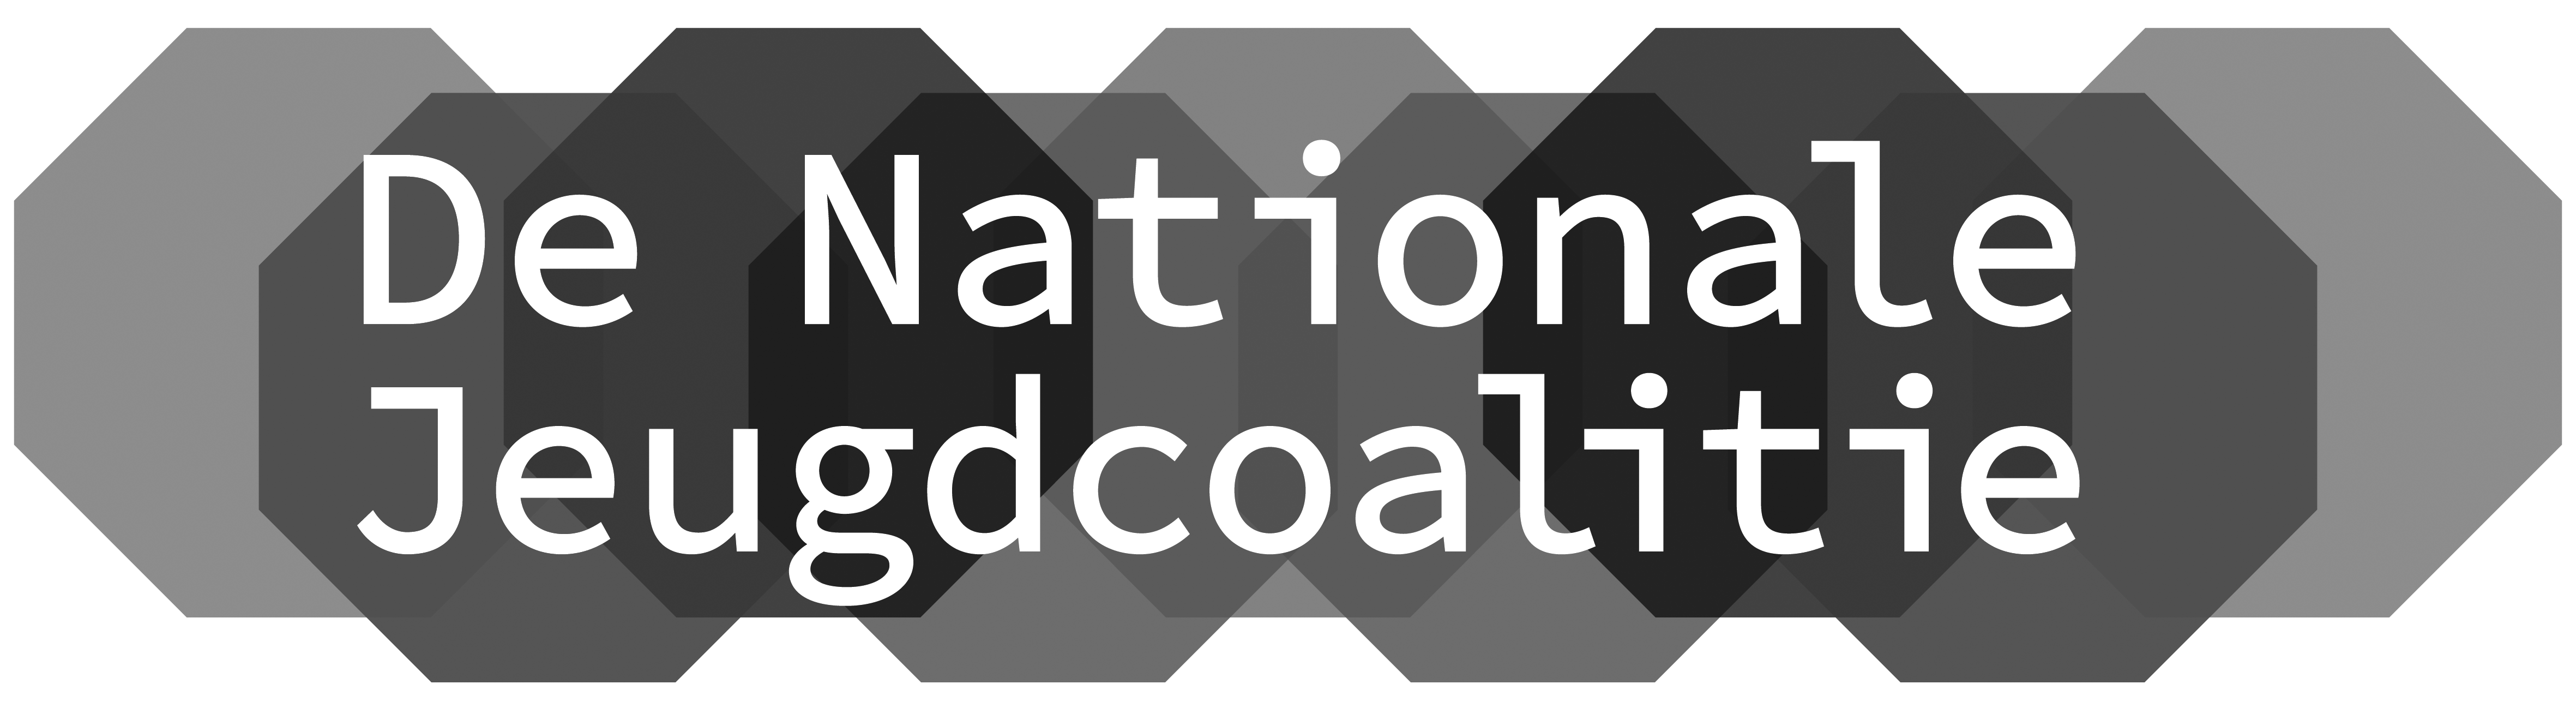 De Nationale Jeugdcoalitie zwart wit logo